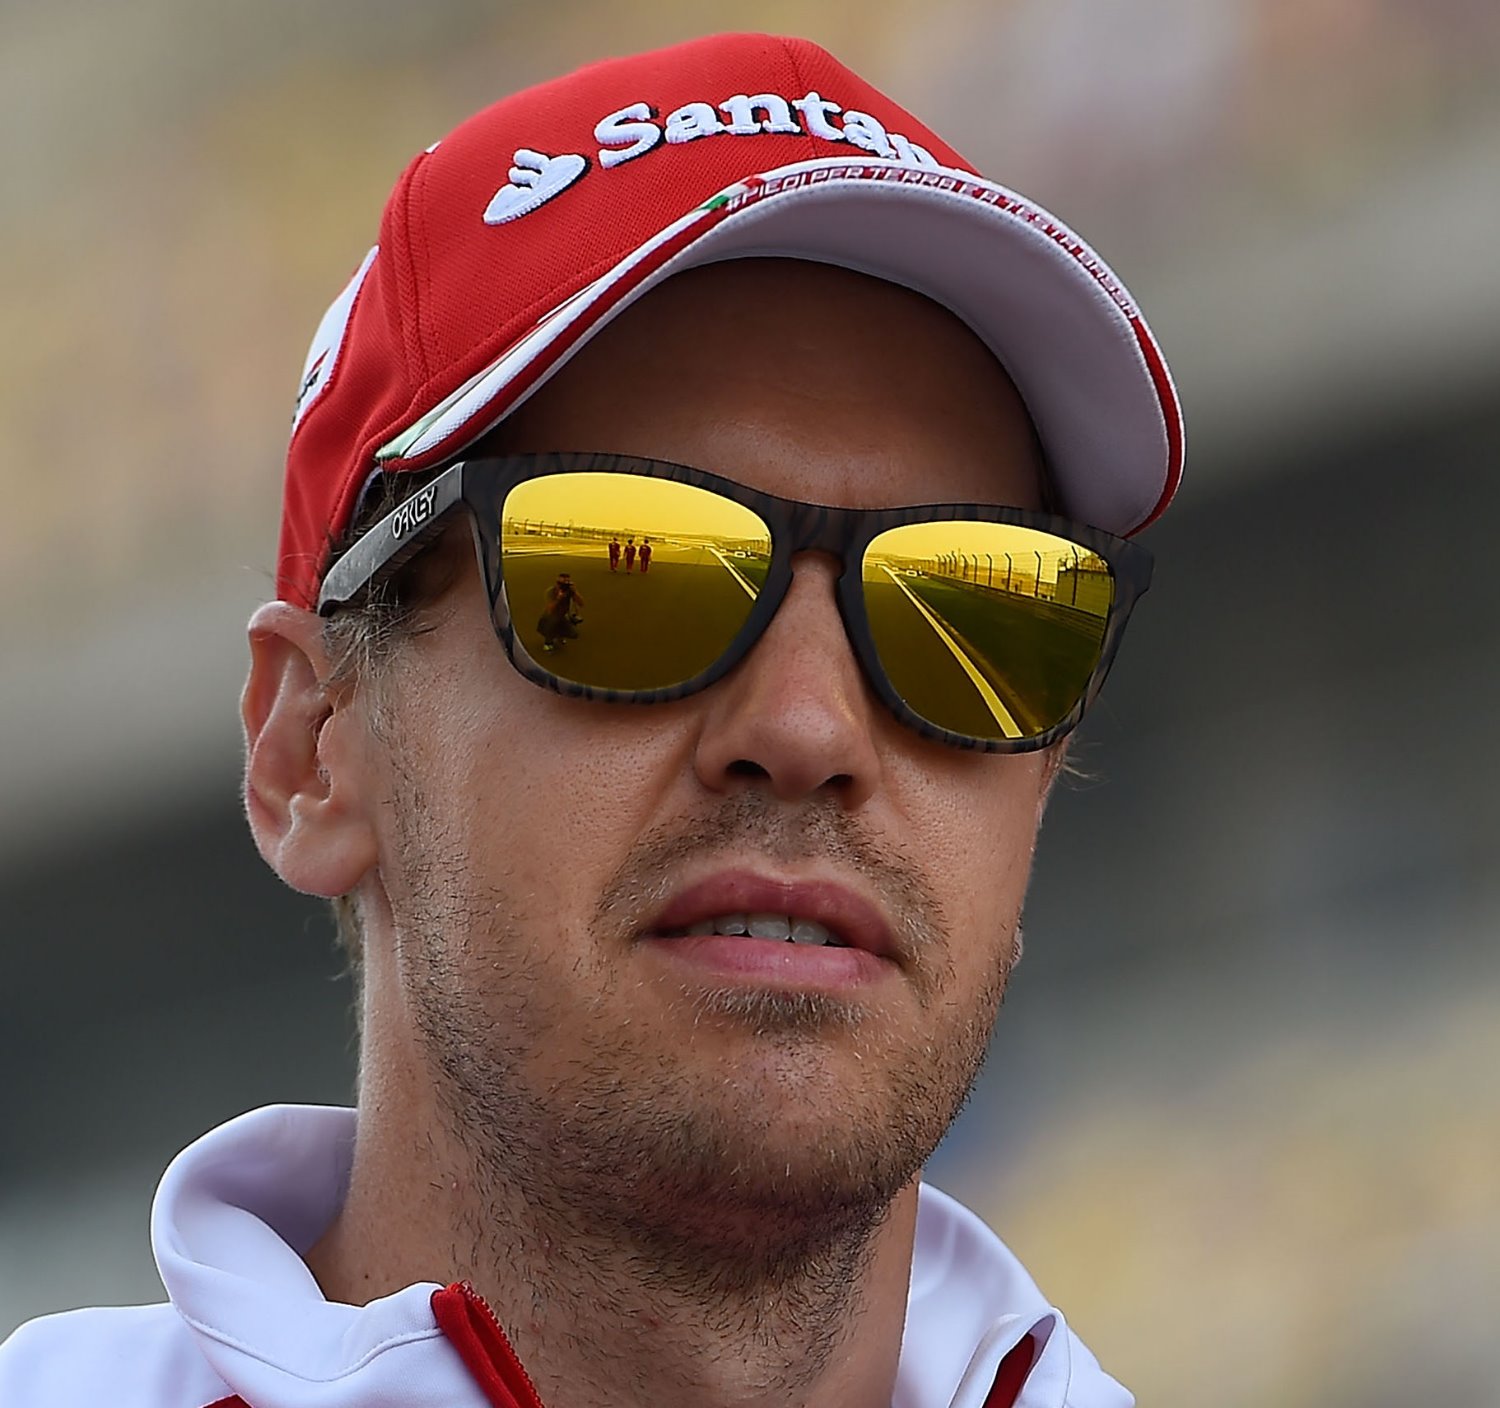 Vettel scoffs at rumored driver strike